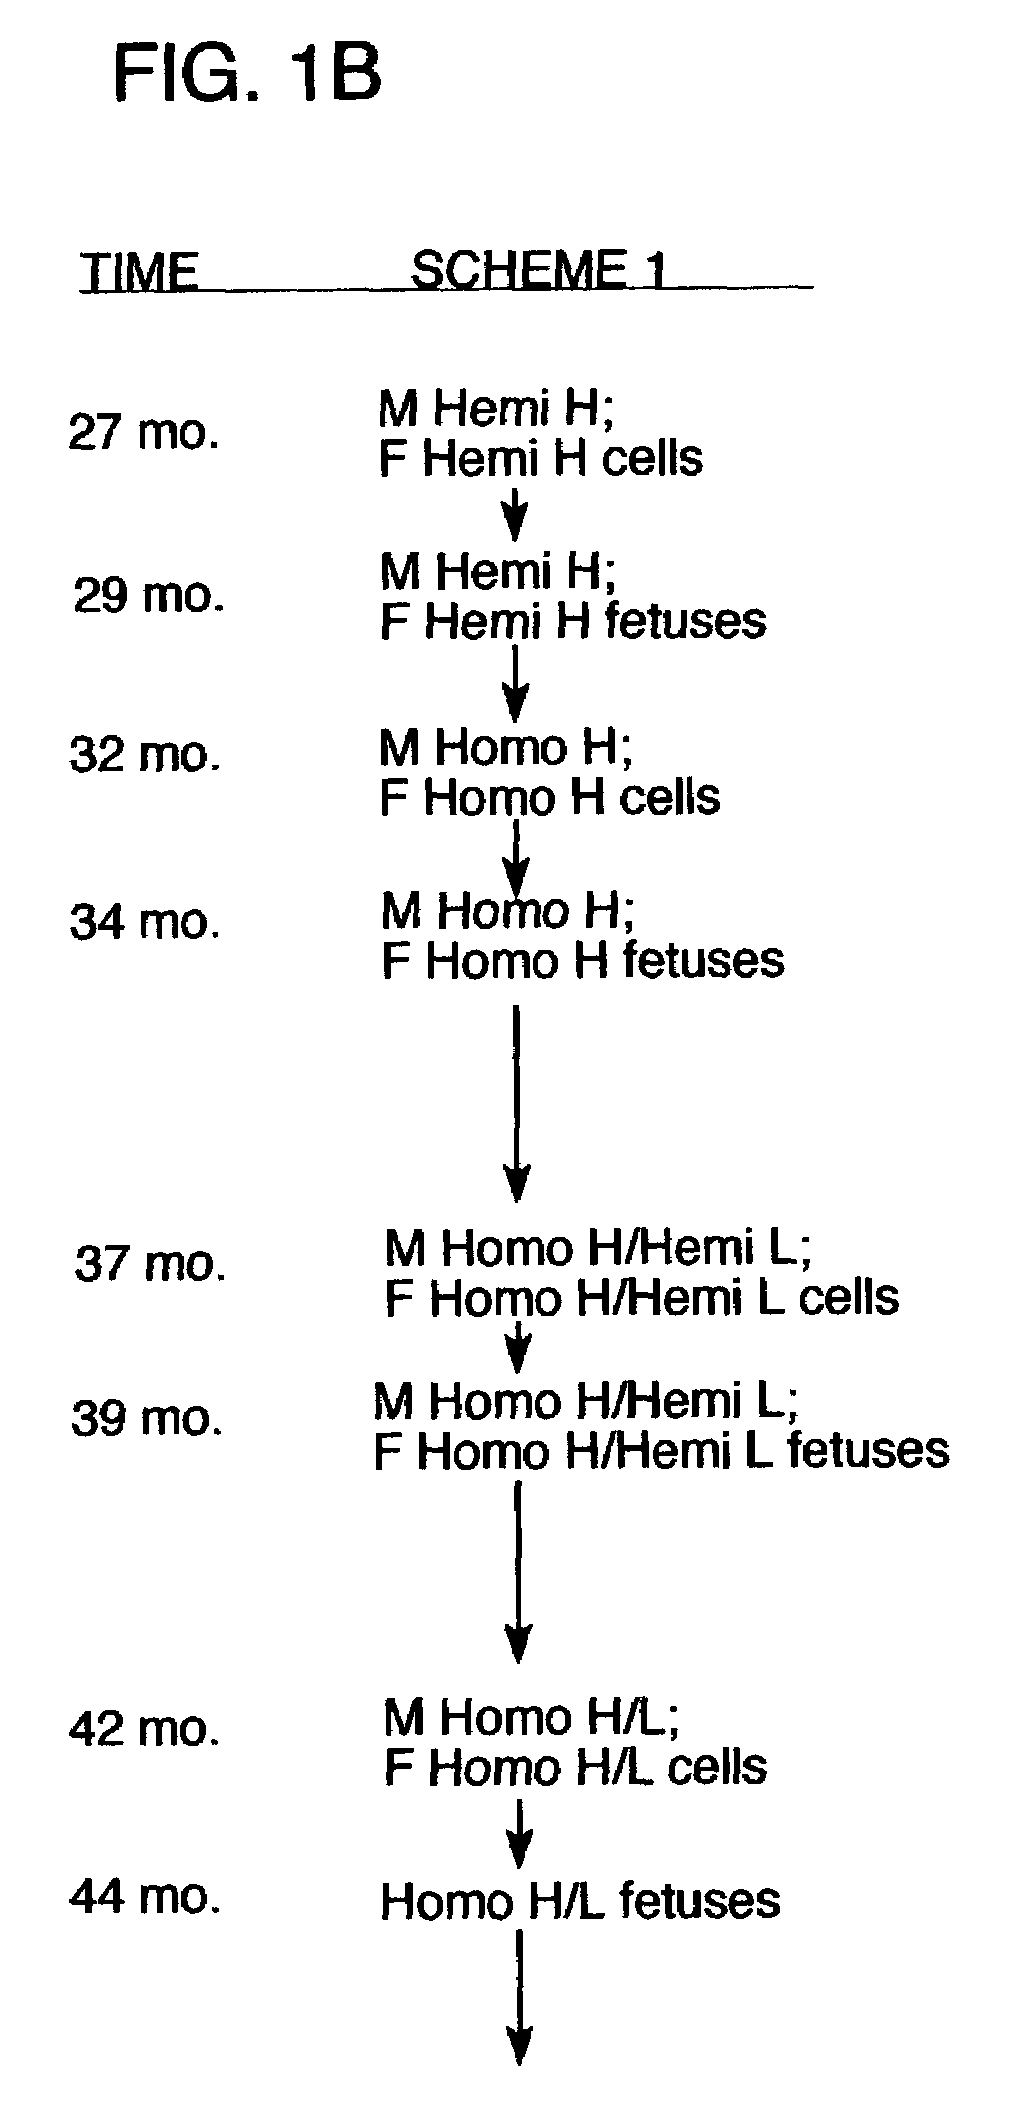 Transgenic bovine comprising human immunoglobulin loci and producing human immunoglobulin